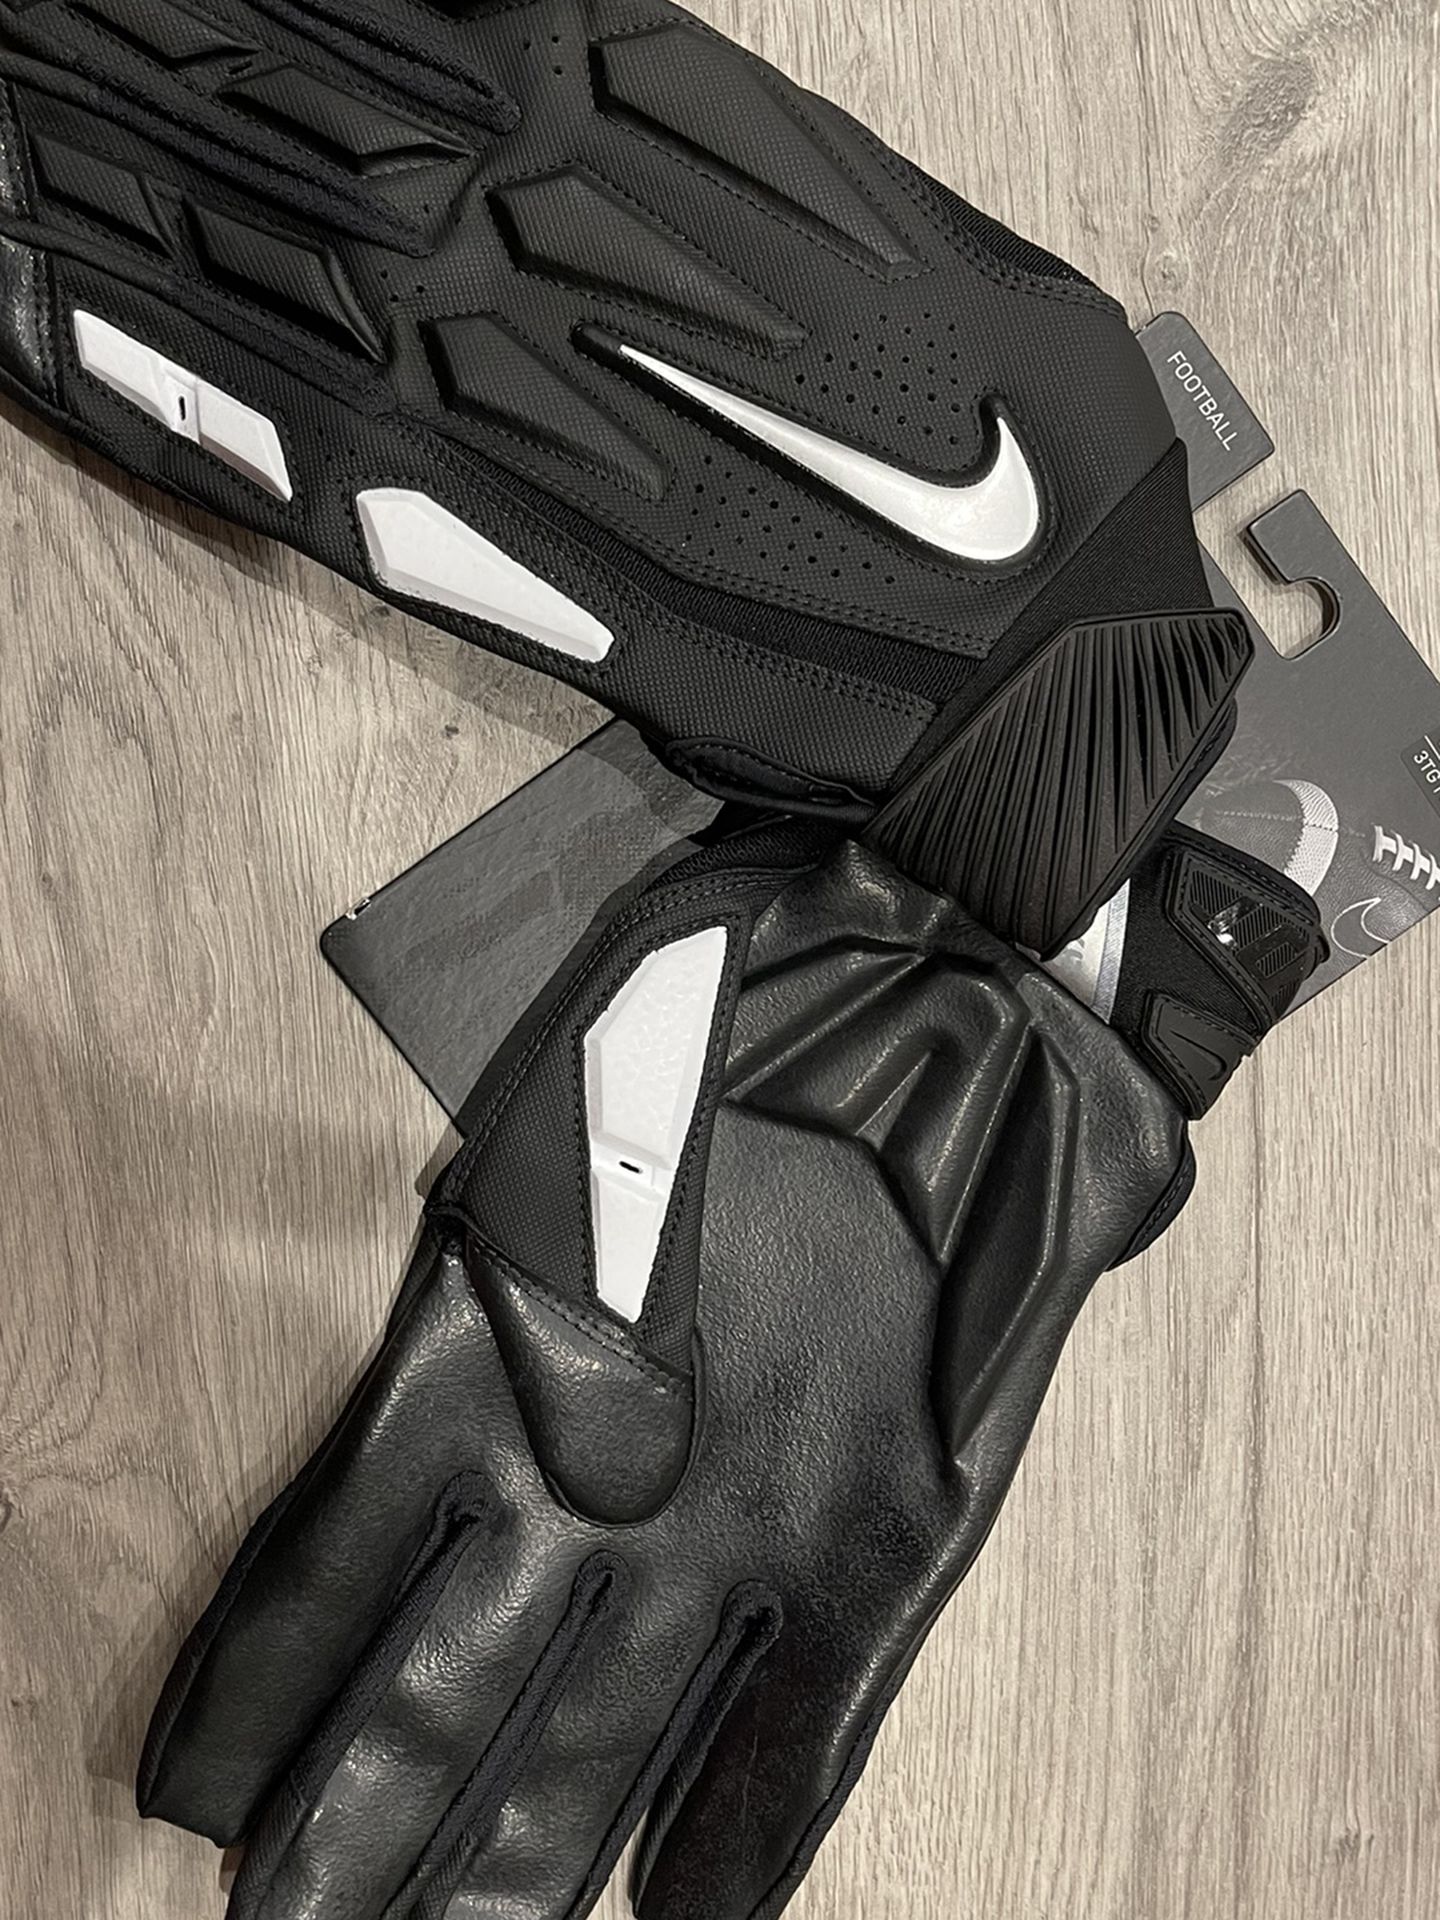 Nike D-Tack 6.0 Lineman Football Gloves Black/Silver Mens Size XXXL GF0655-937